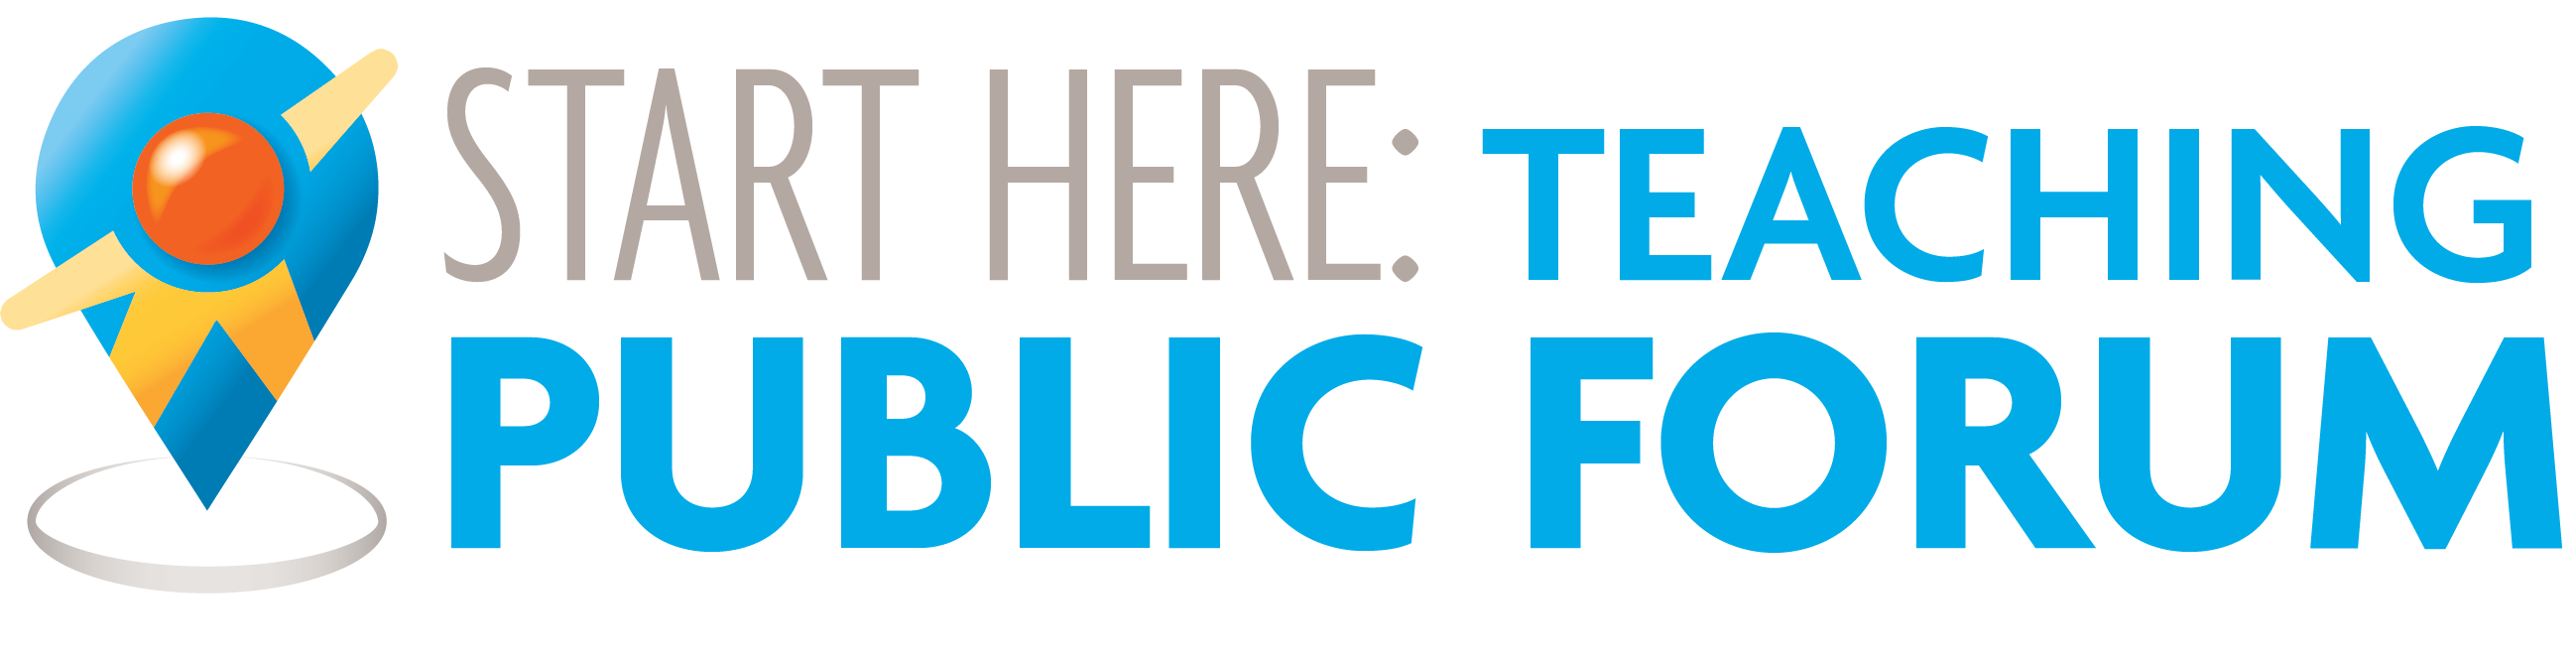 Start Here: Teaching Public Forum Logo